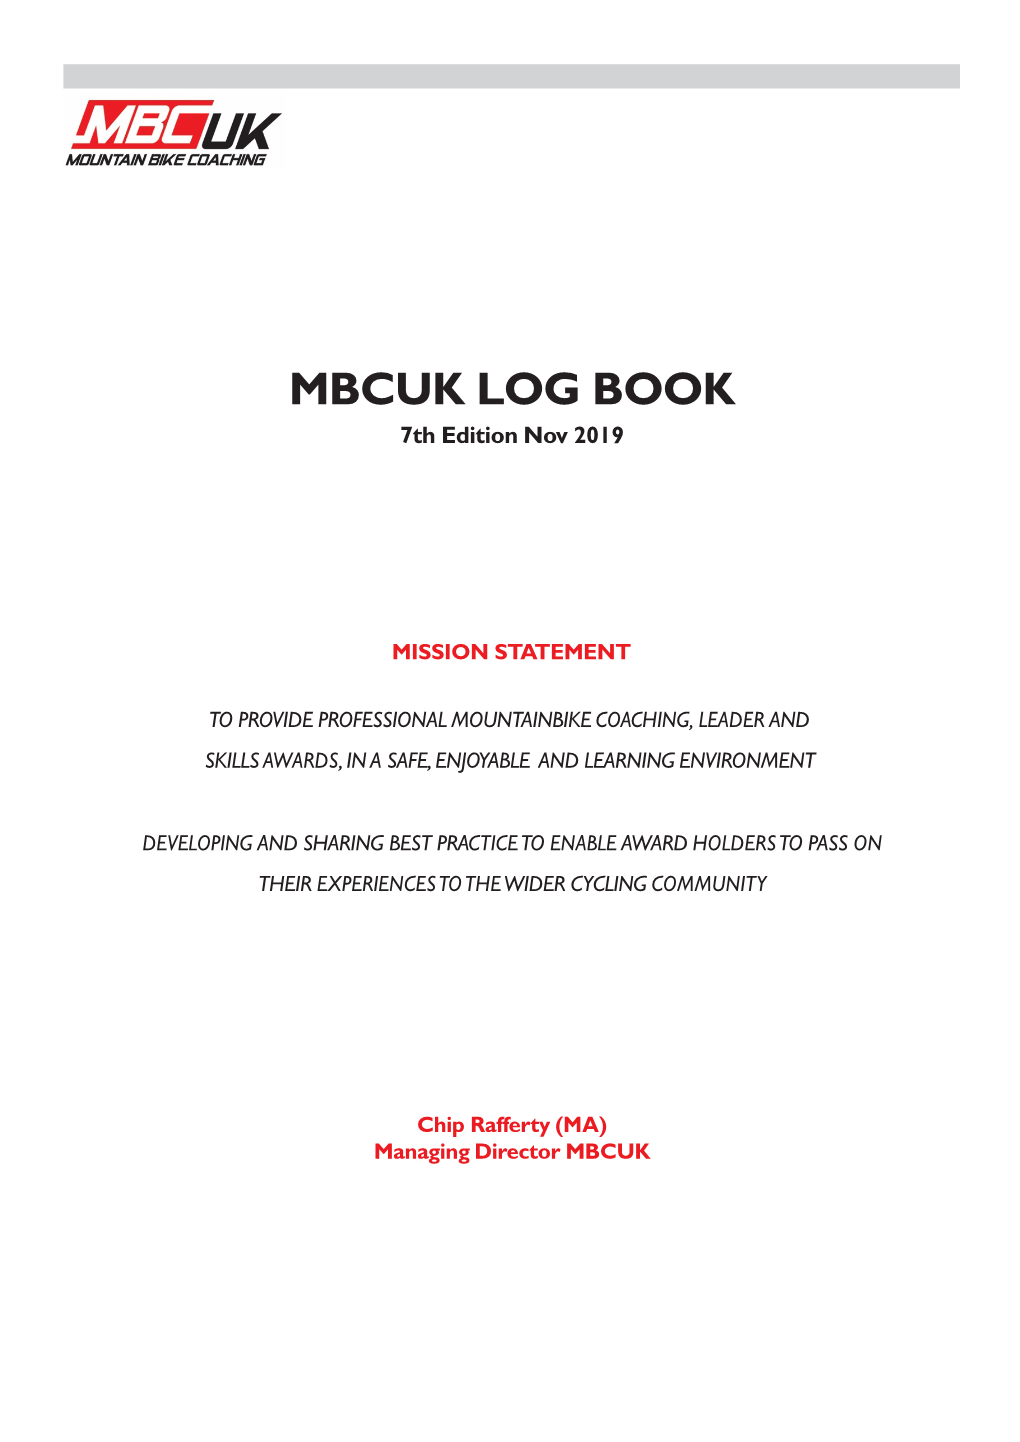 MBCUK LOG BOOK 7Th Edition Nov 2019